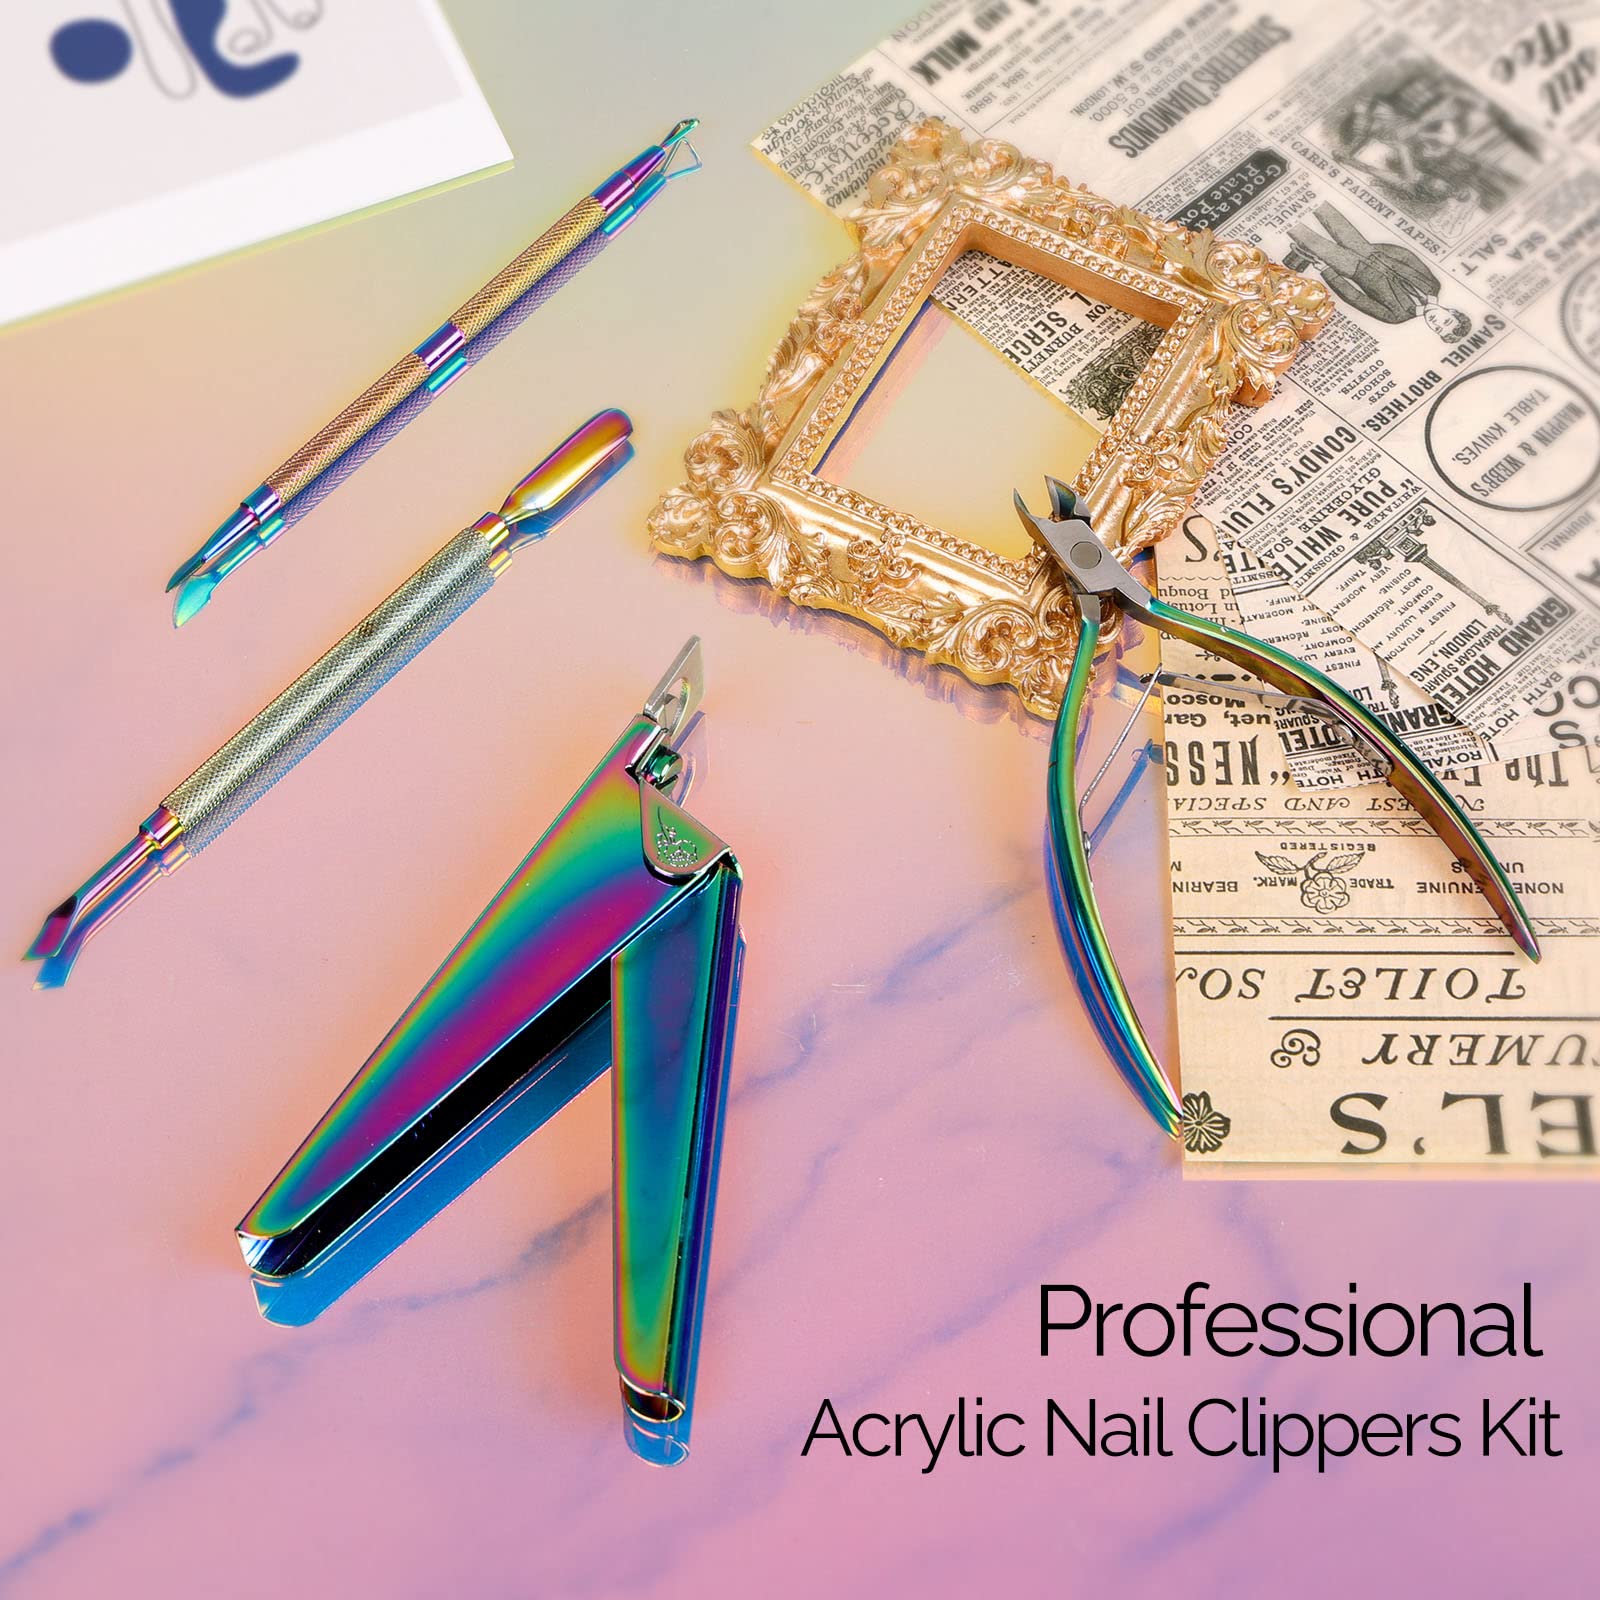 Acrylic Nail Clippers 4 in 1 Kit-Rainbow